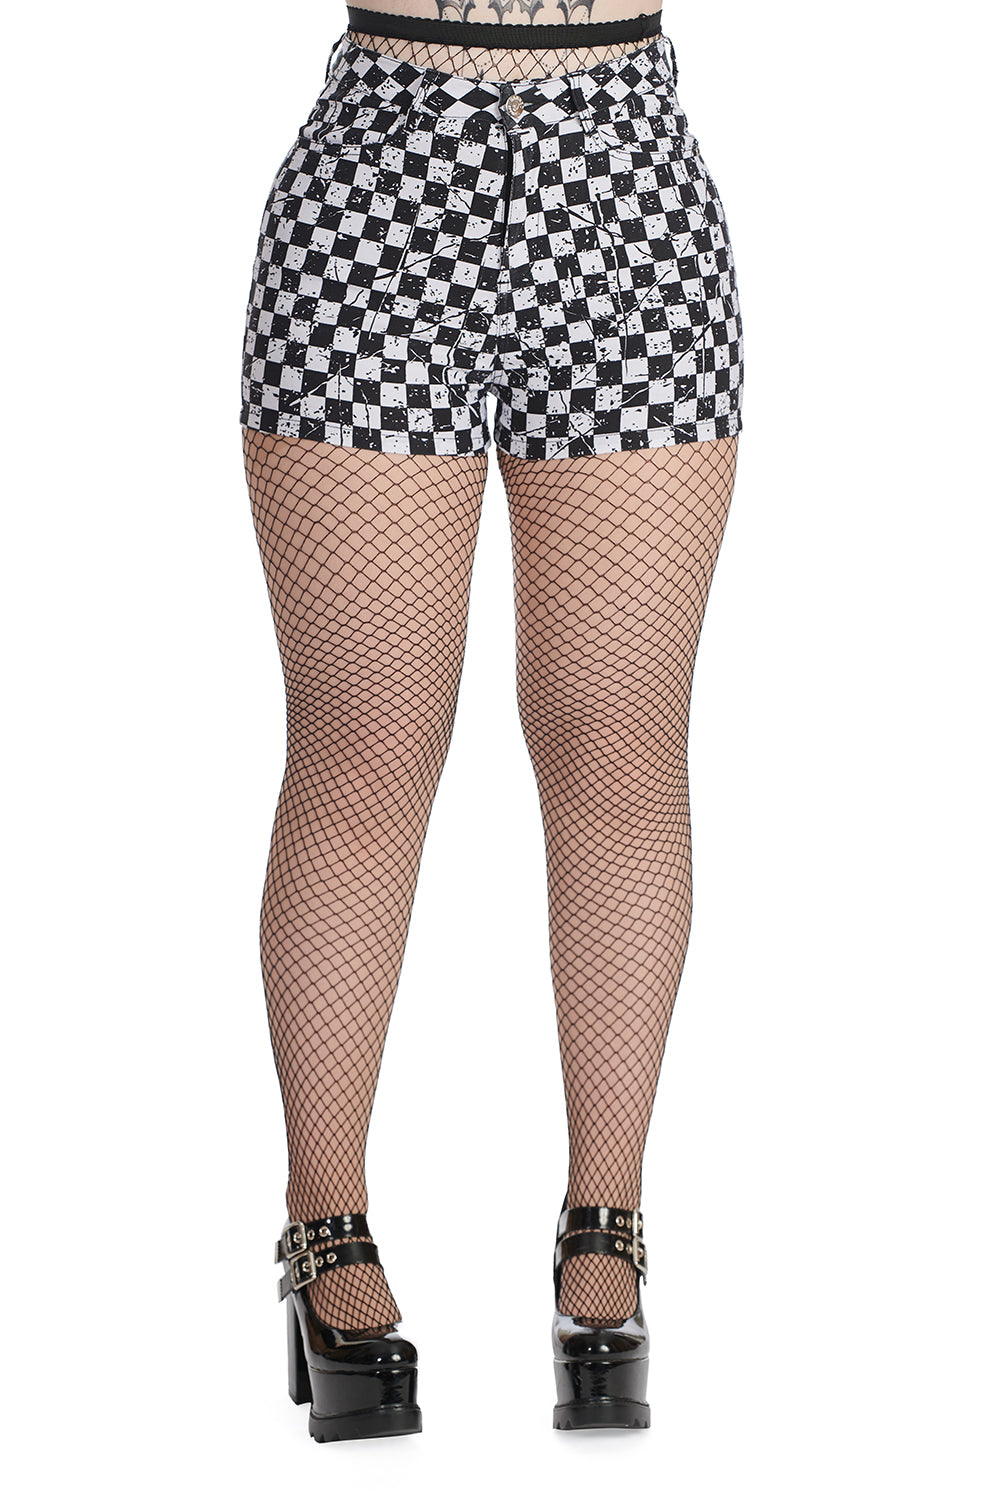 Shorts Checkers [ST81069] (I24M)